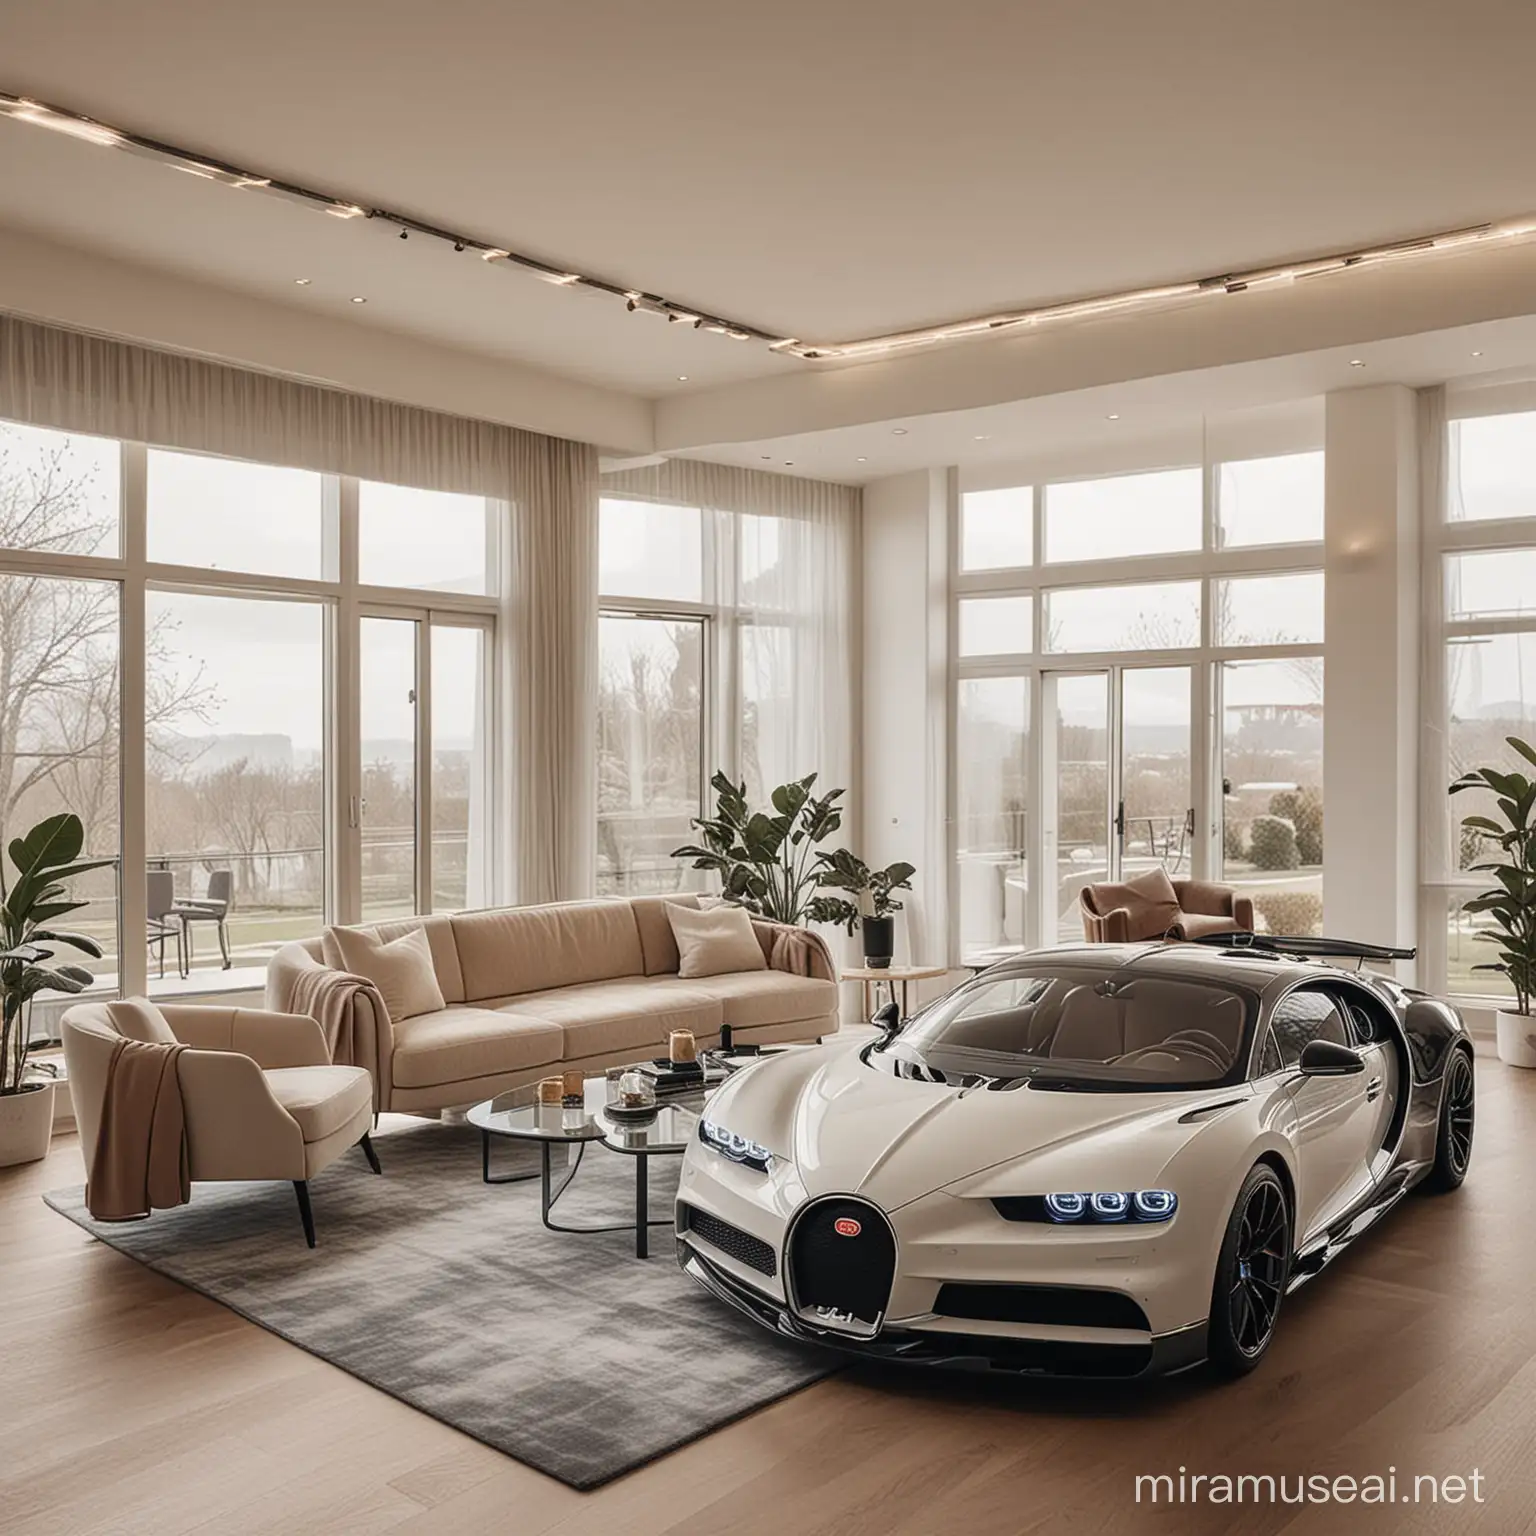 Bugatti Chiron inside a living room